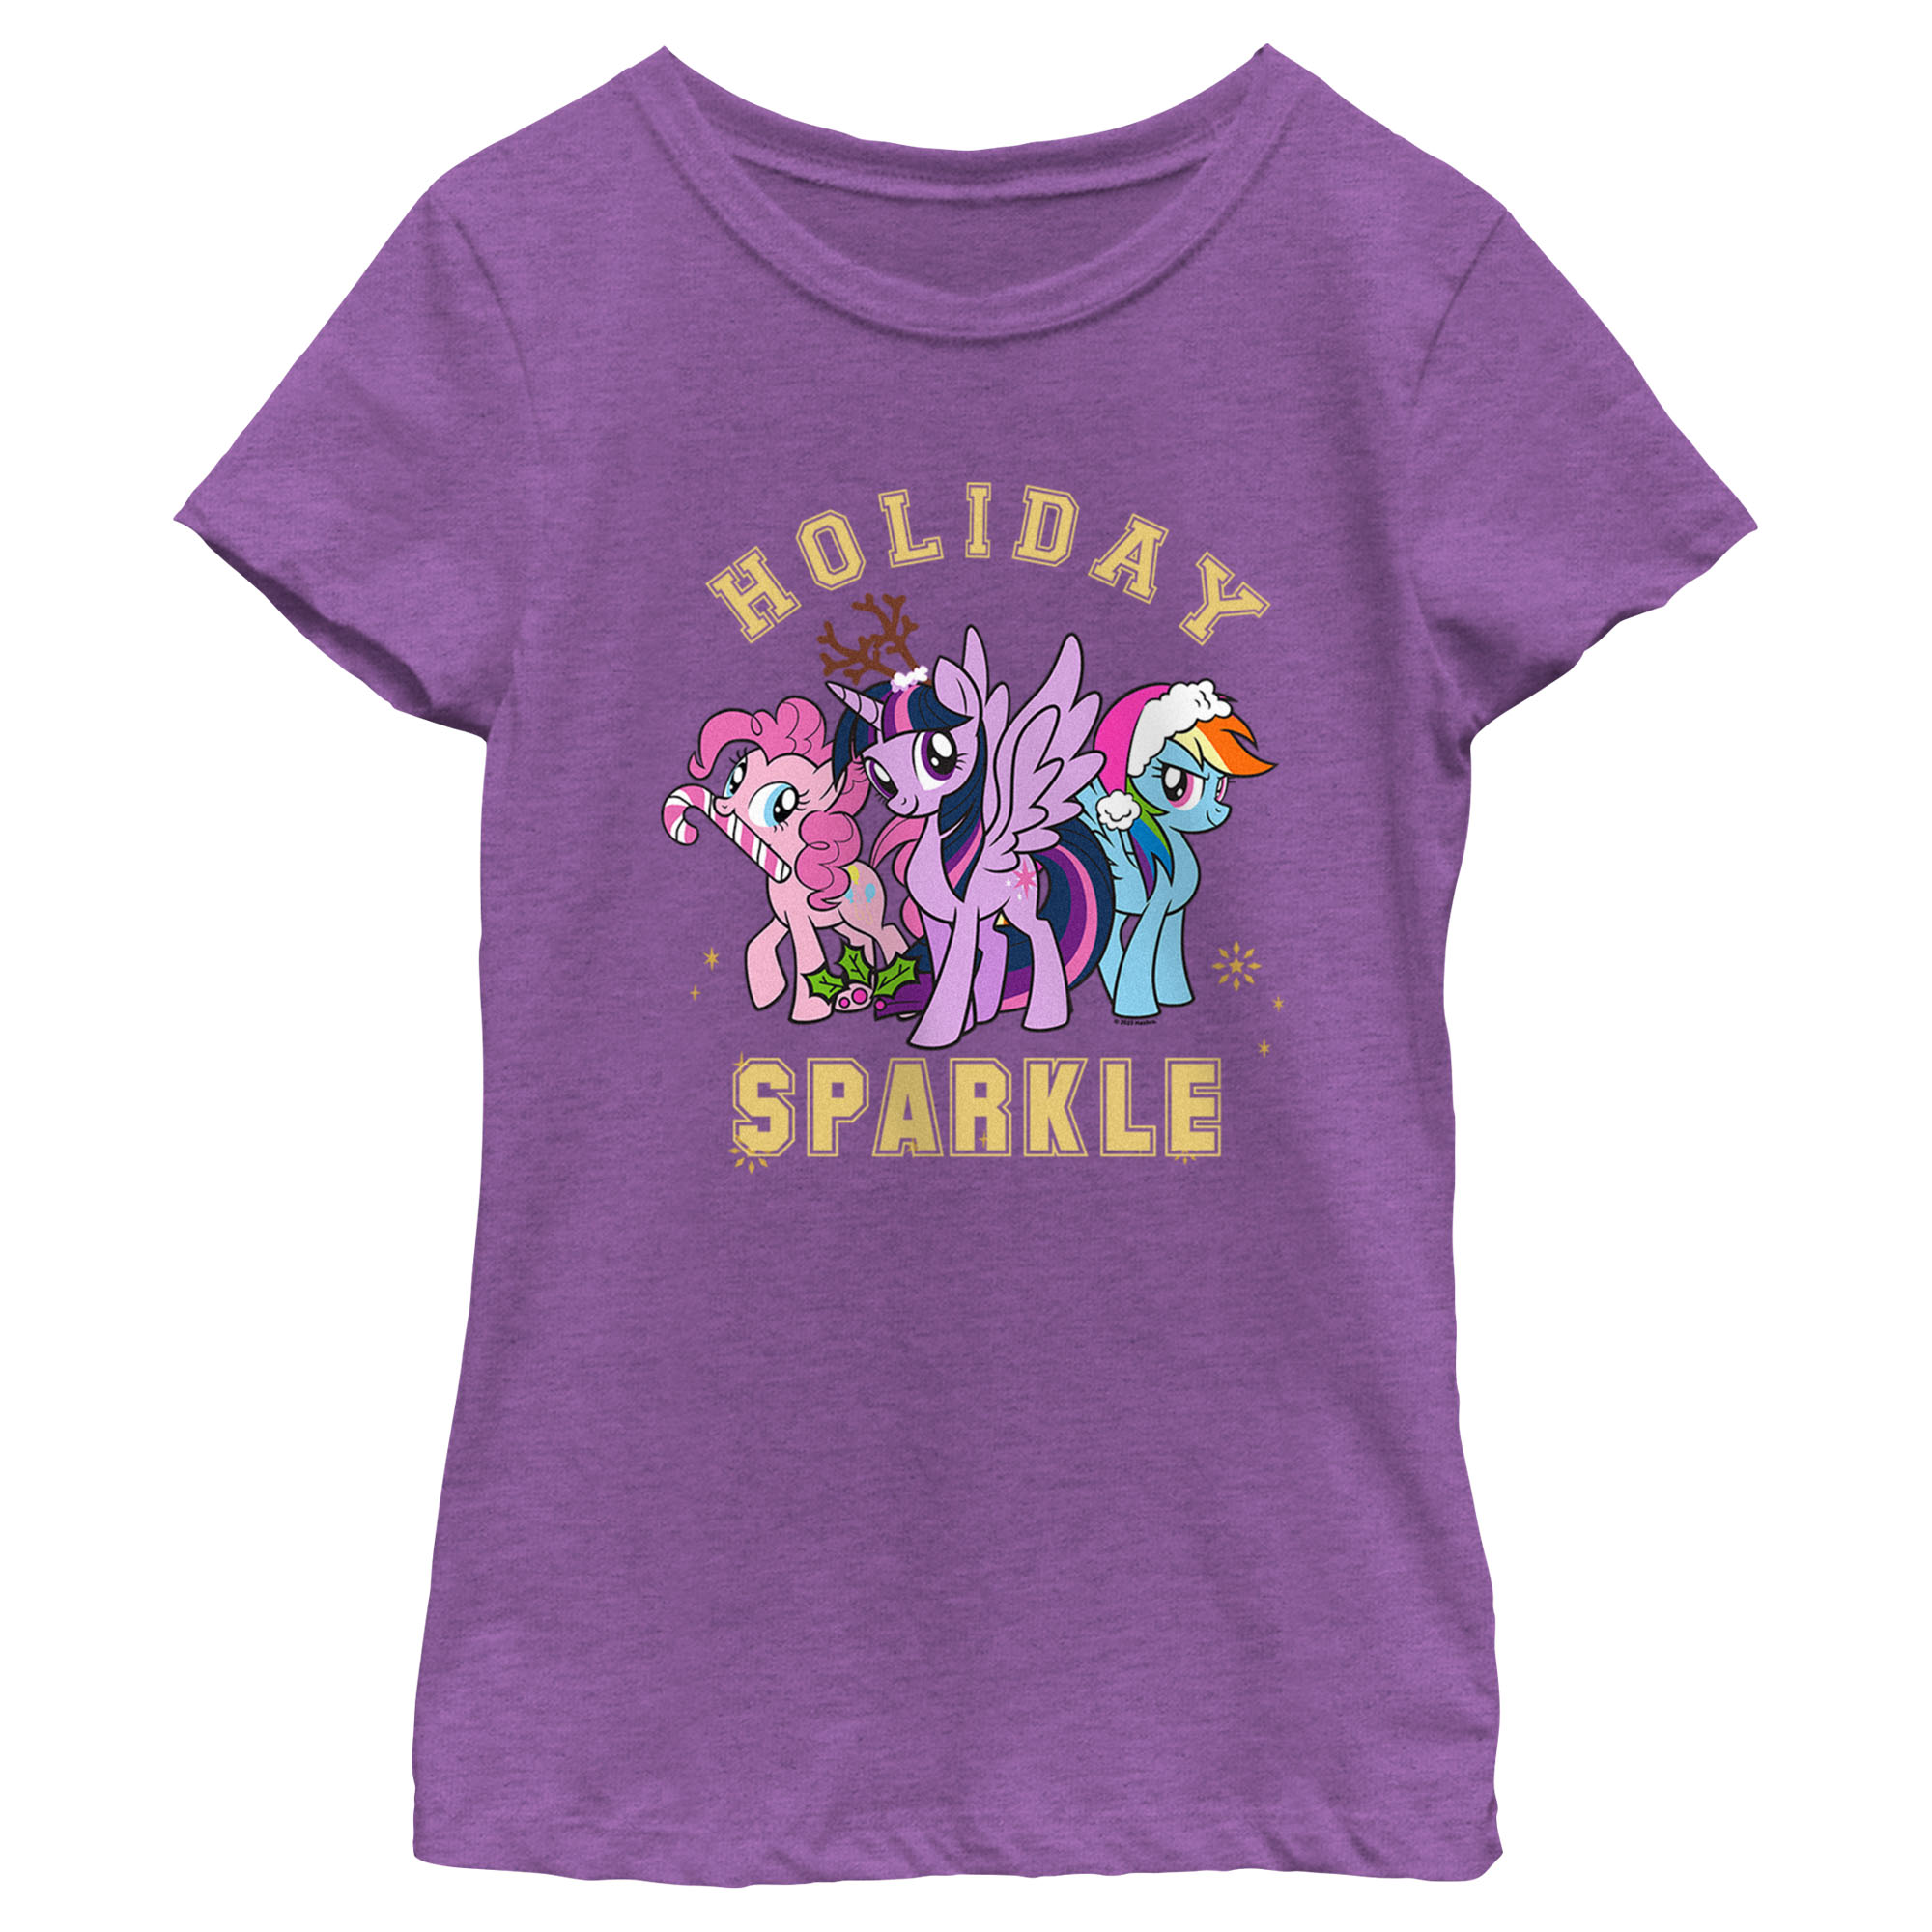 My Little Pony: Friendship is Magic Girl's My Little Pony: Friendship is Magic Holiday Sparkle  Graphic T-Shirt